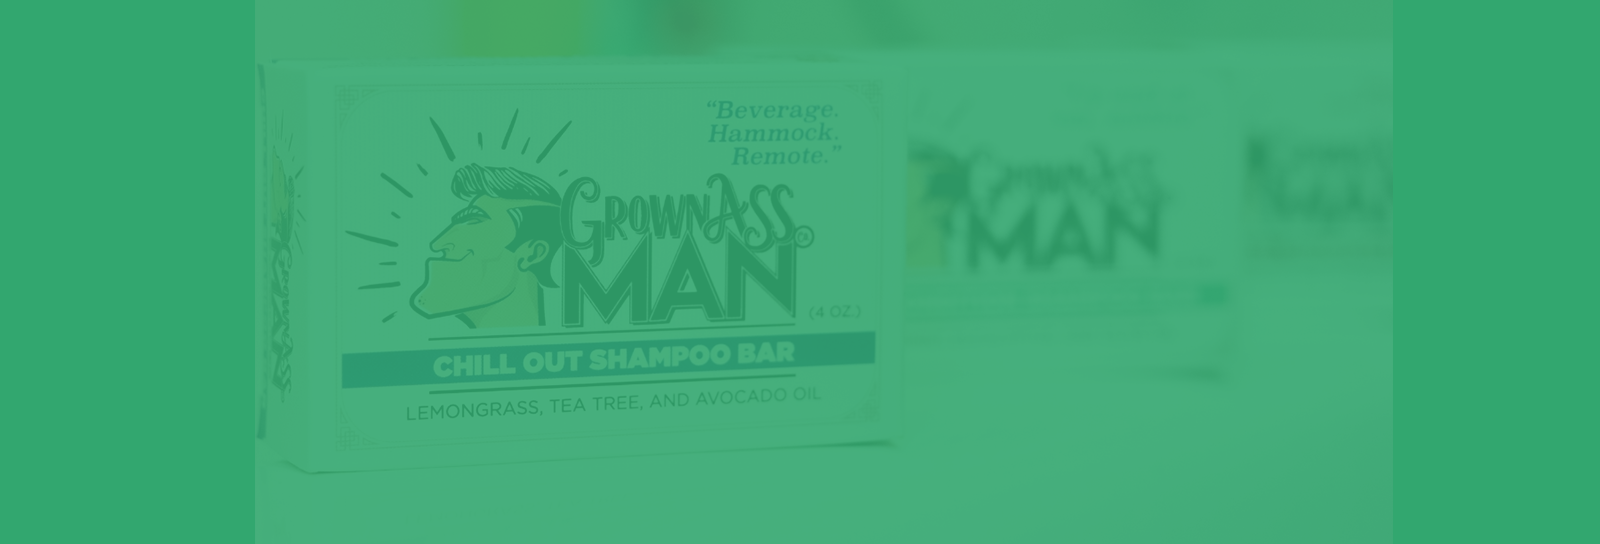 Men's Shampoo Bars: 10 Awesome Benefits of Switching to a Bar Shampoo